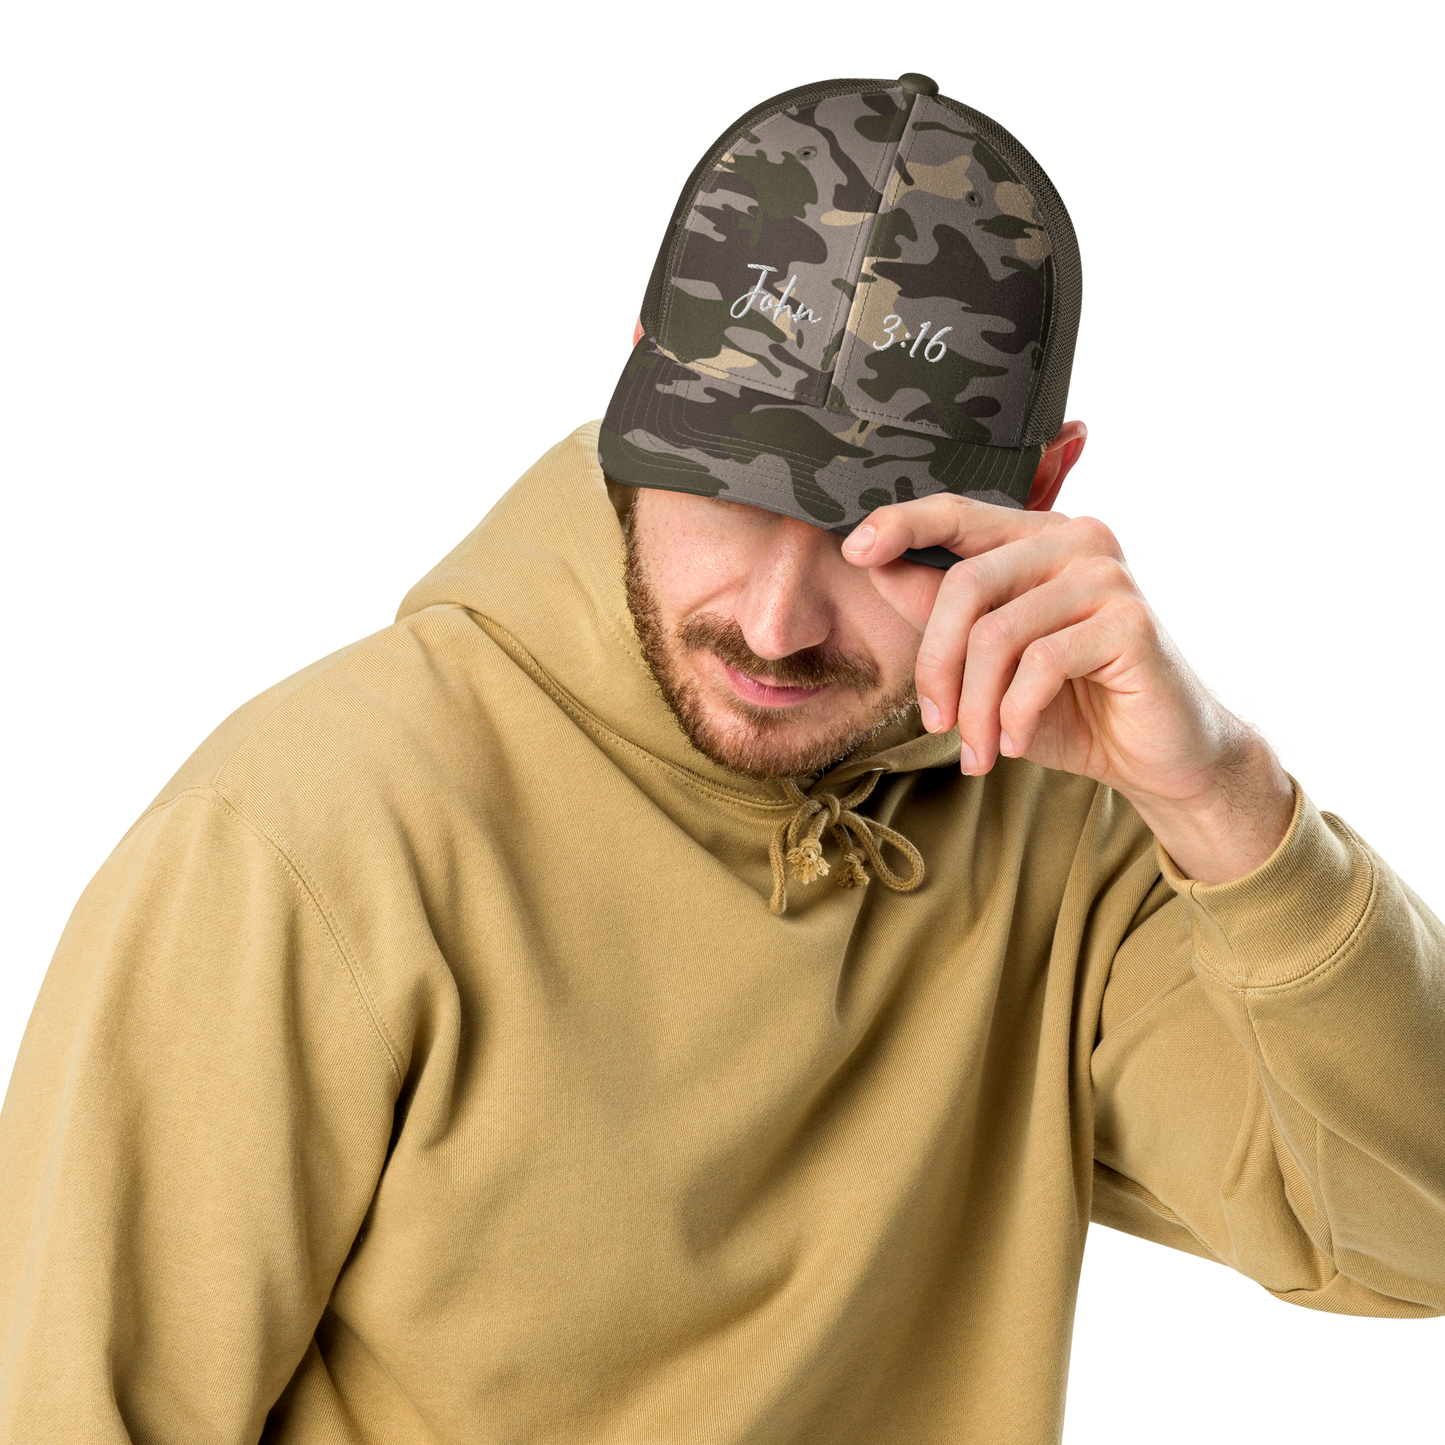 John 3:16 Camouflage Hat